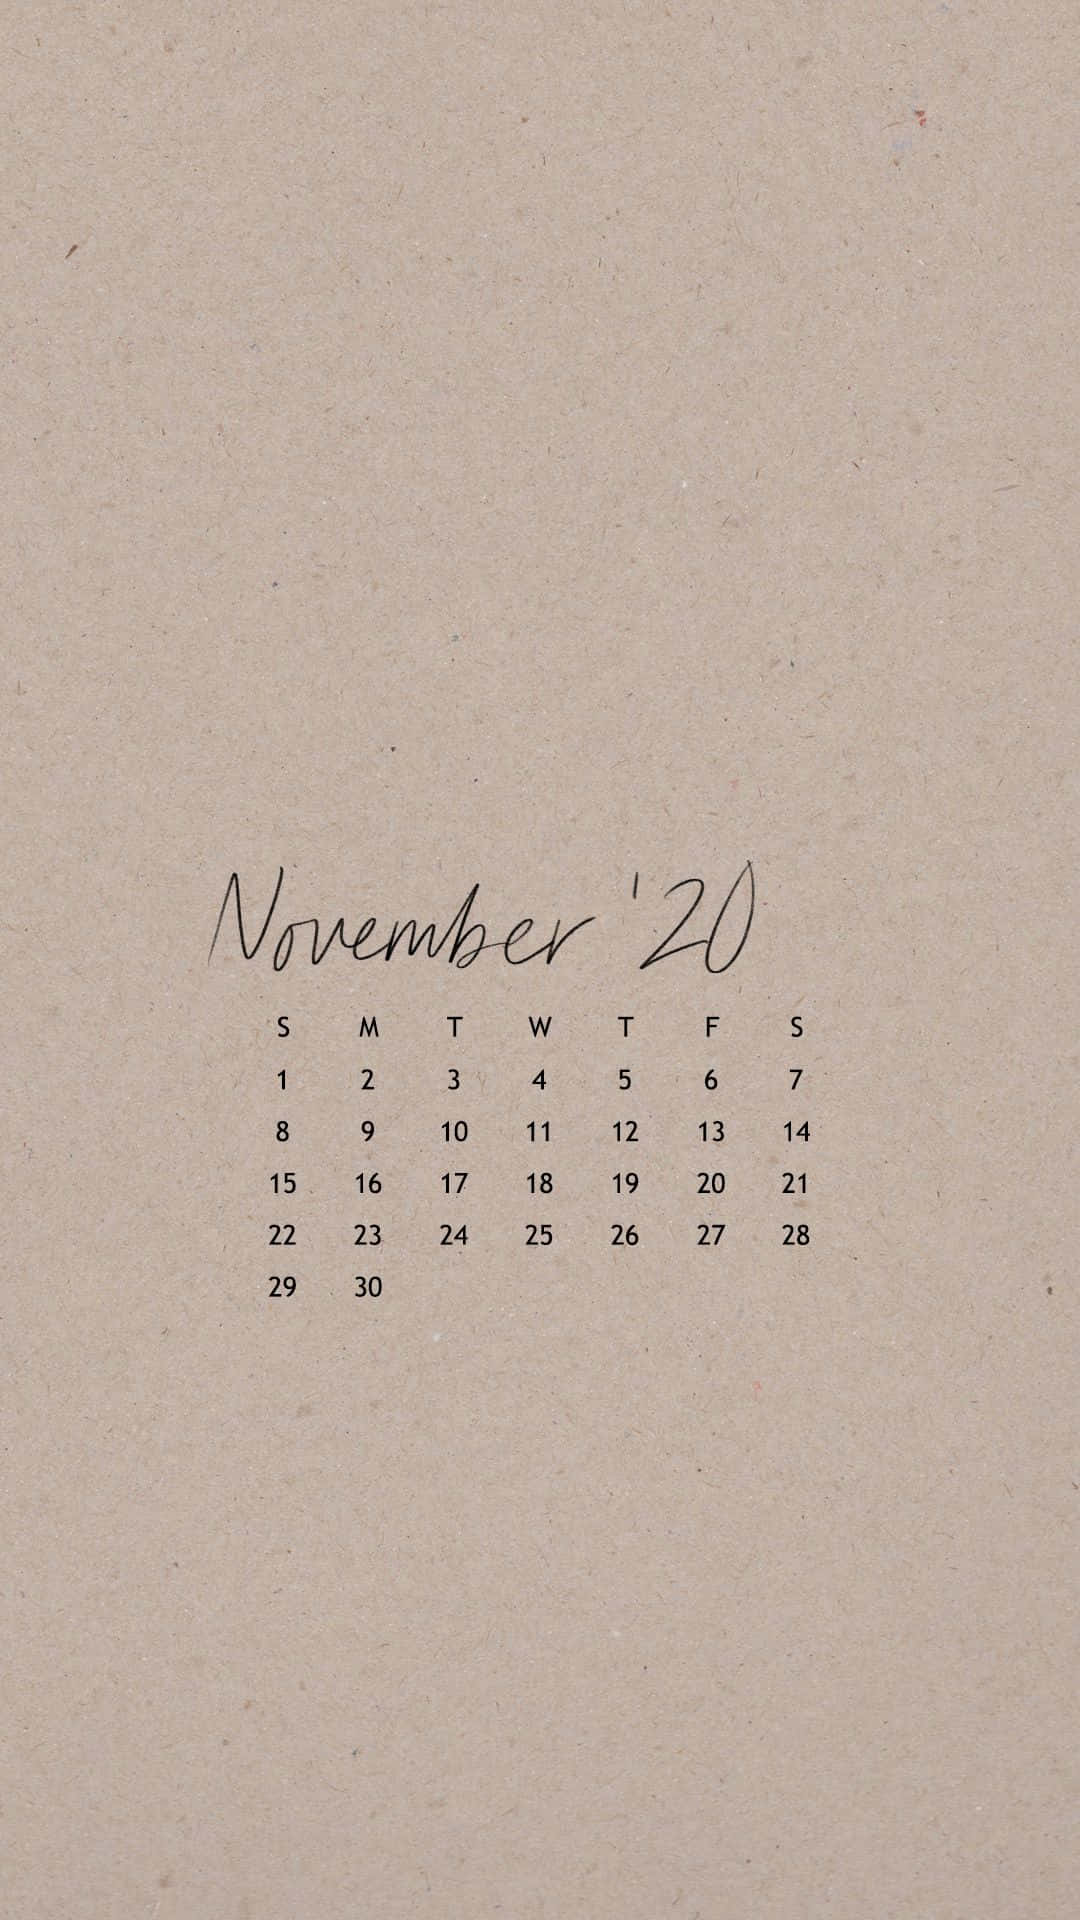 Aesthetic November 2020 Calendar Picture